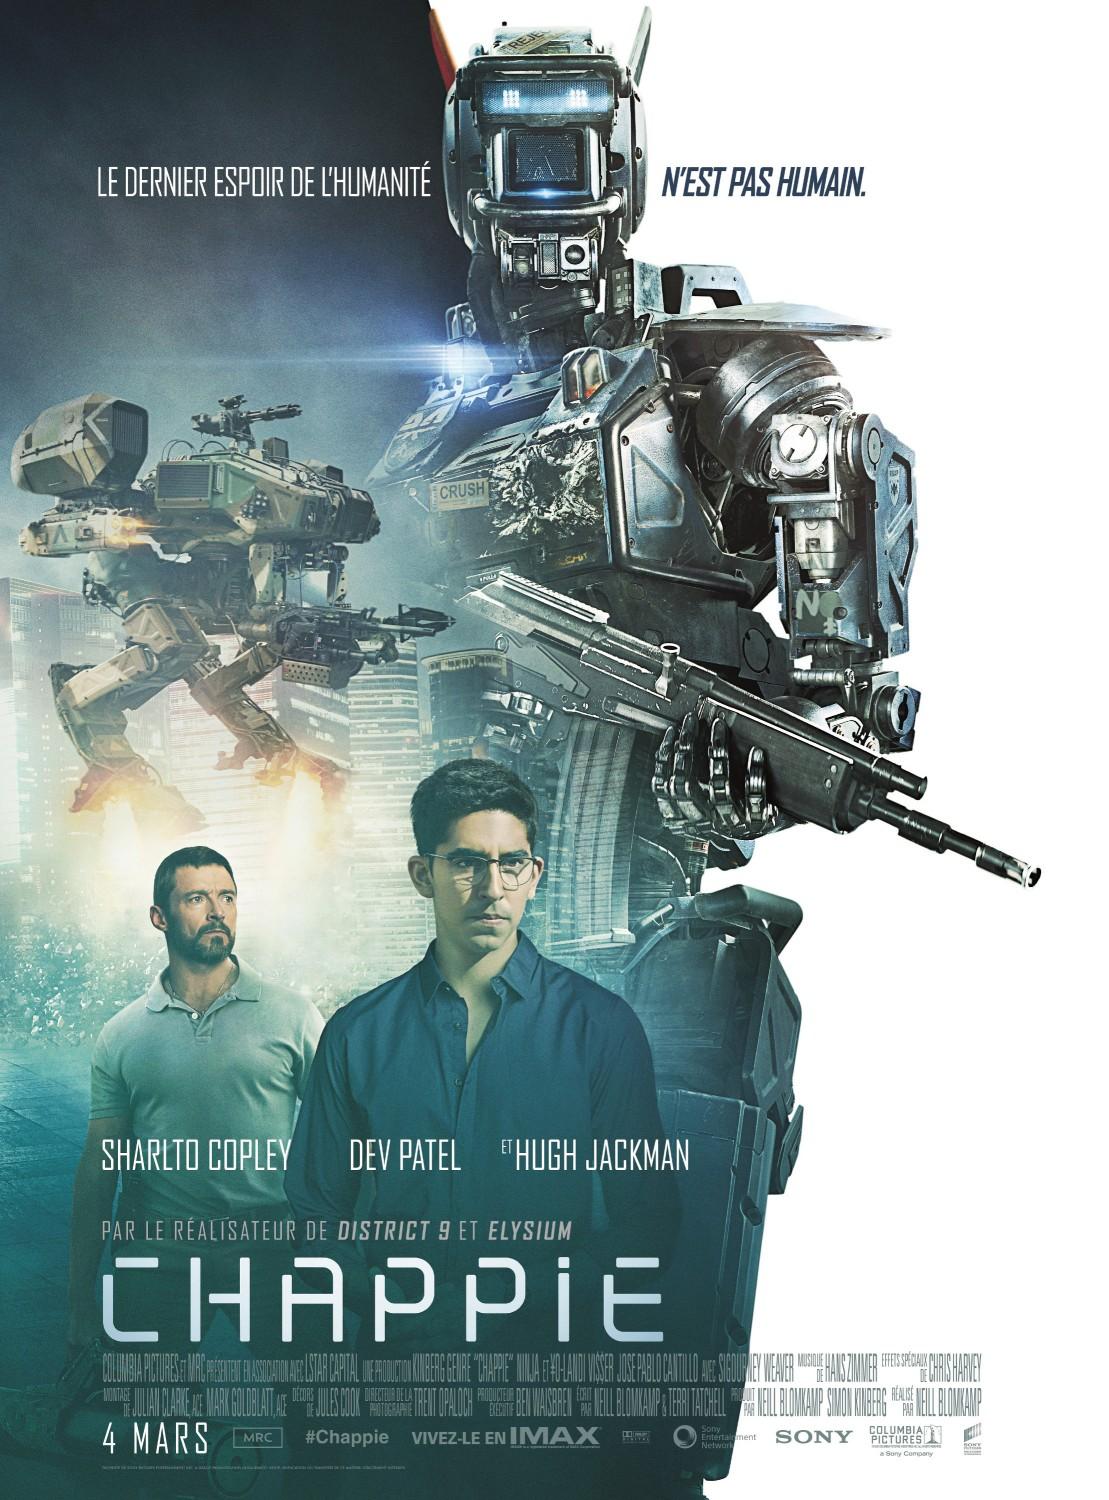 Постер - Робот по имени Чаппи: 1109x1500 / 217.06 Кб